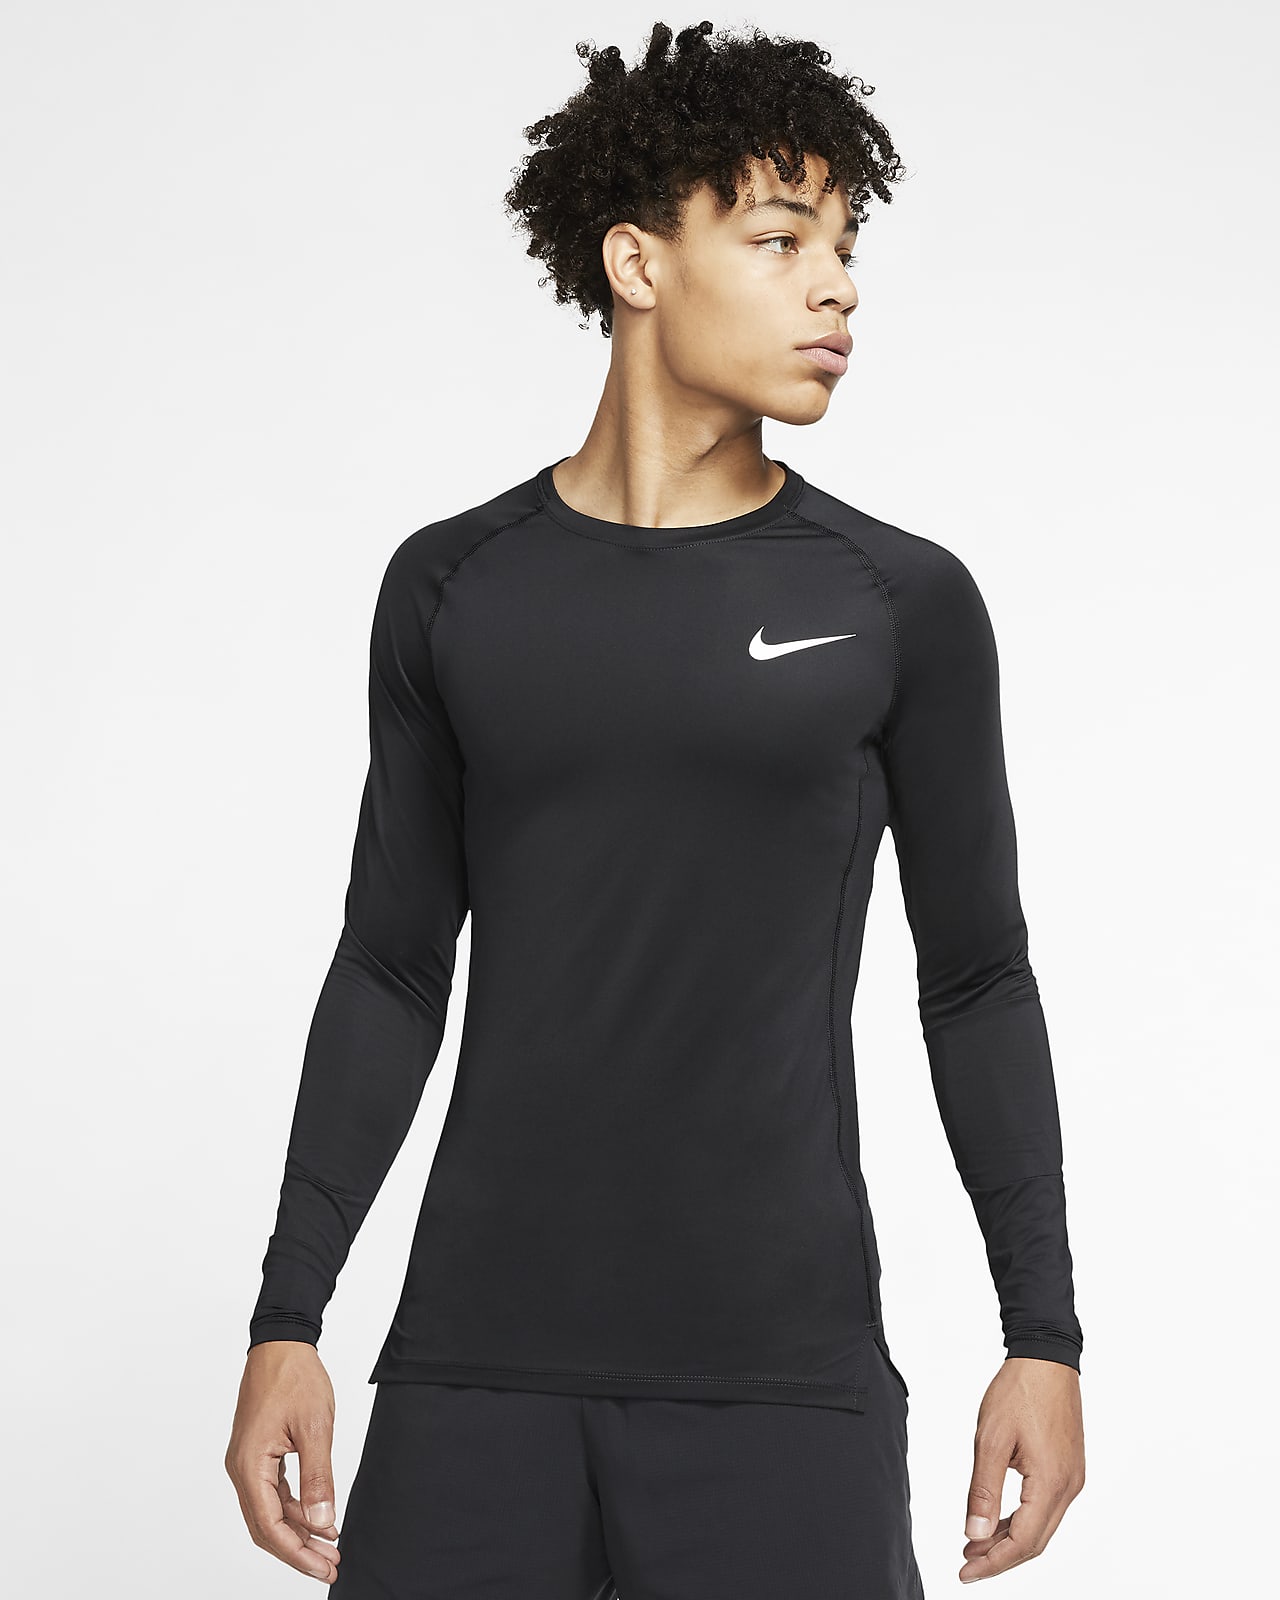 Nike Pro Men's Tight-Fit Long-Sleeve Top. Nike LU